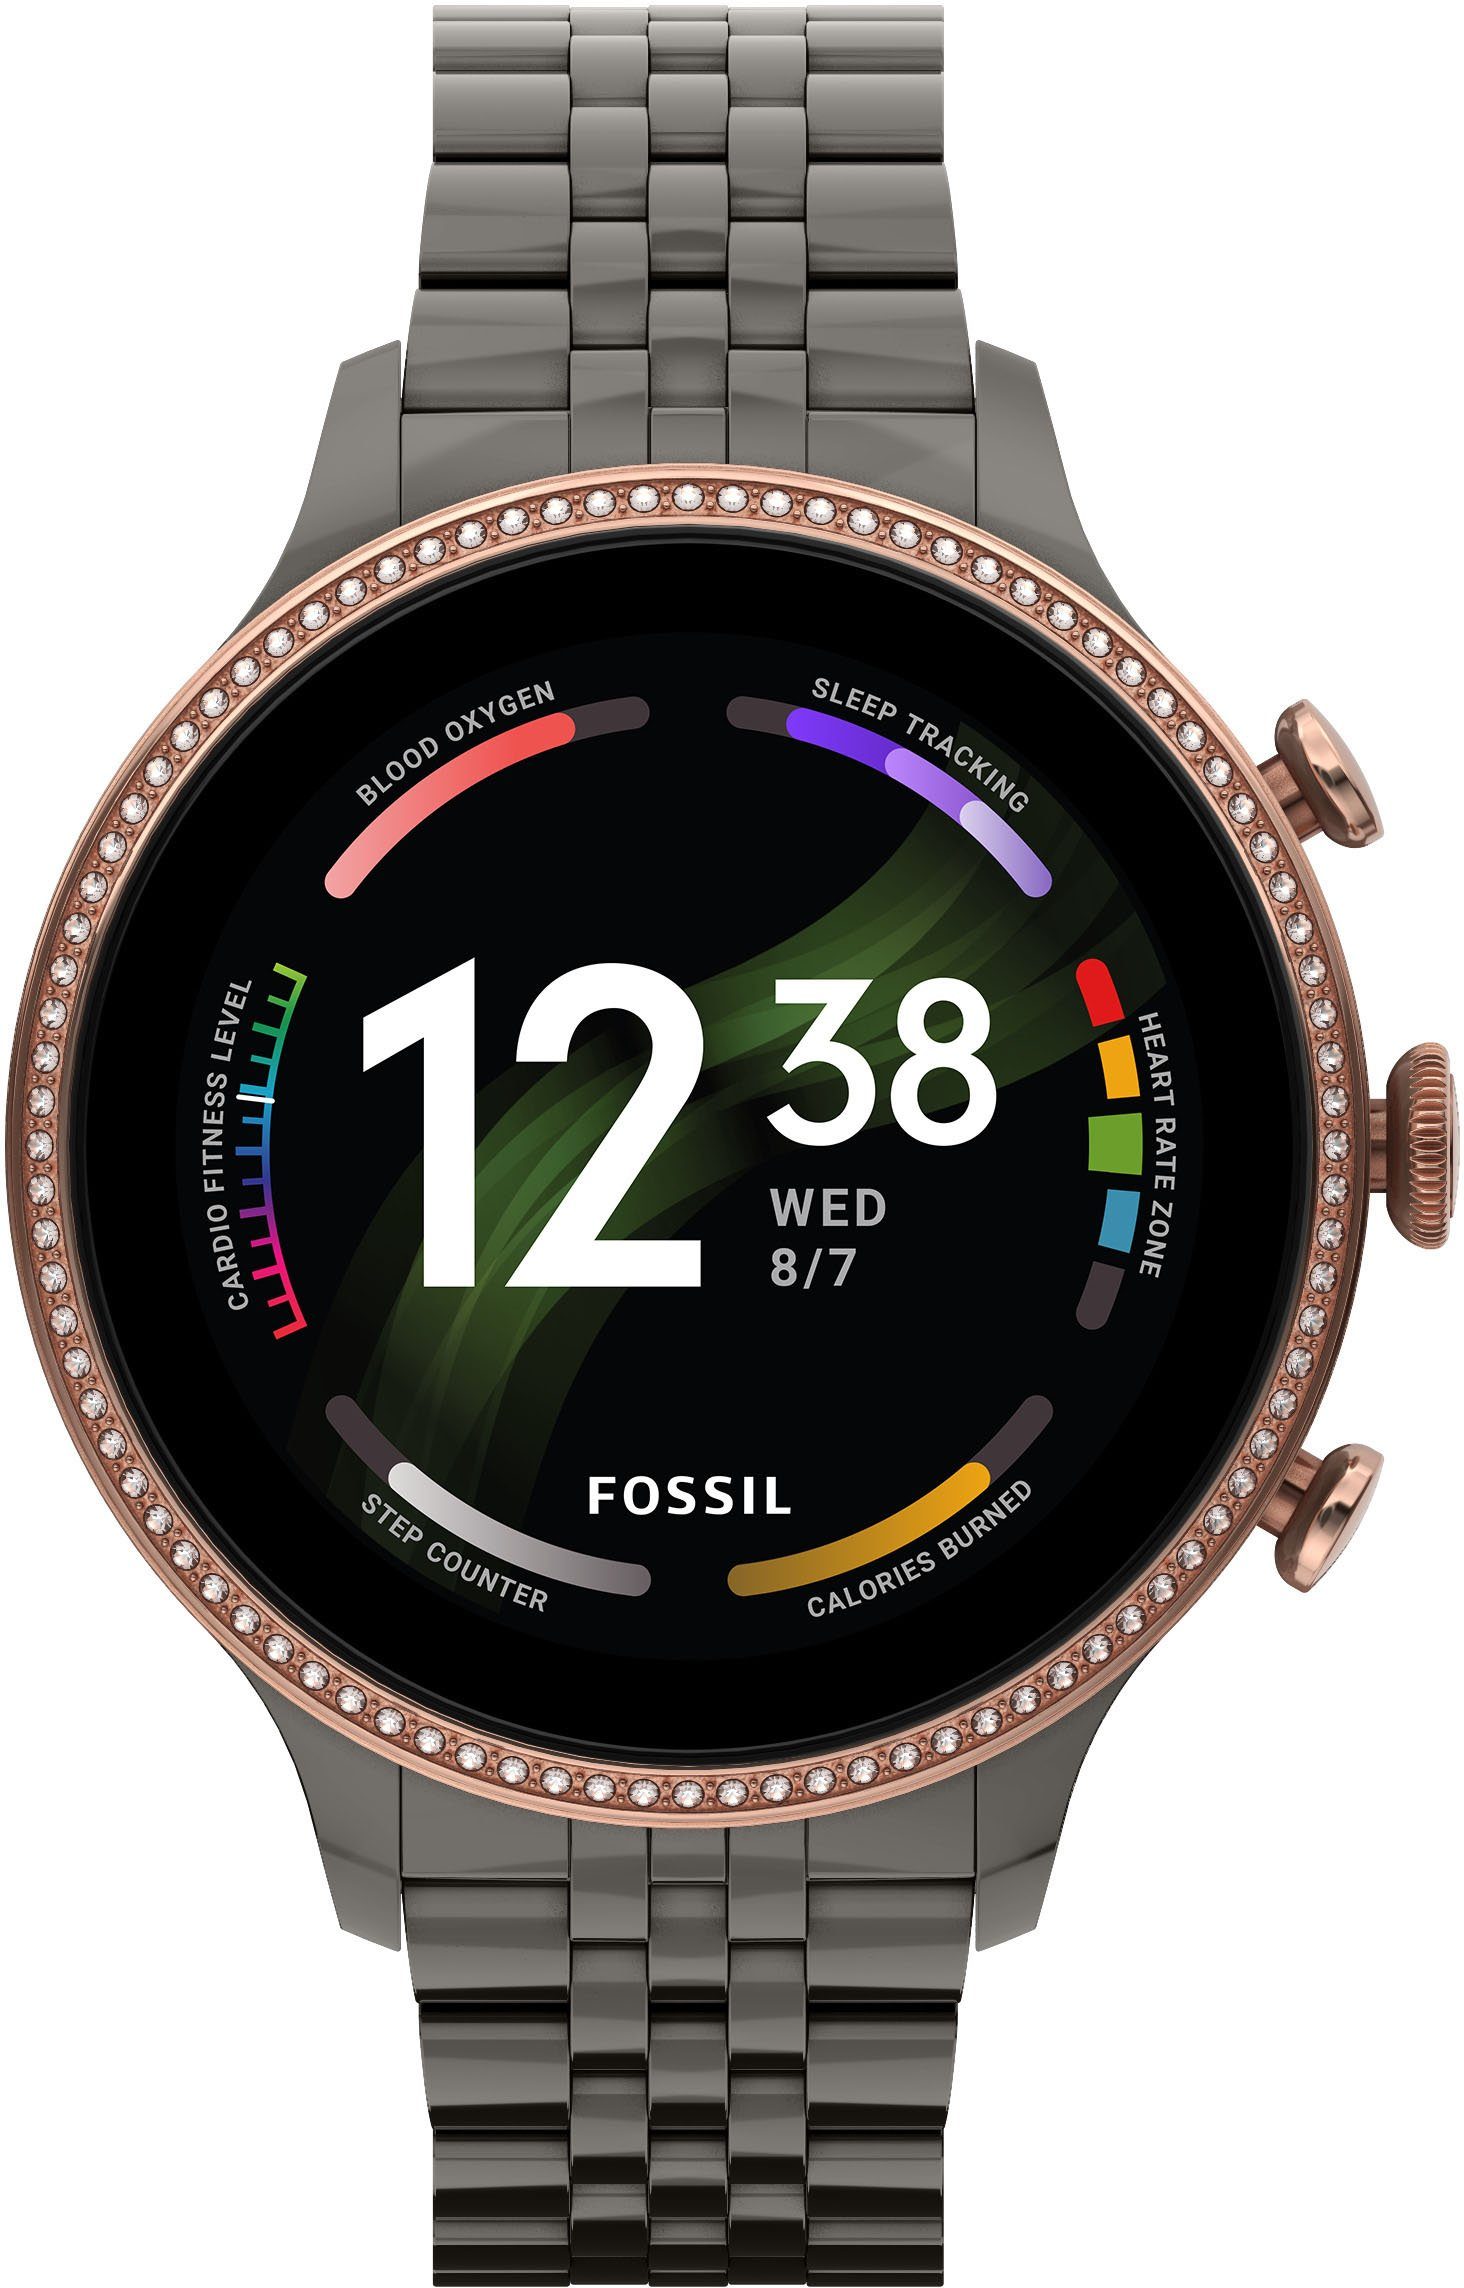 Smartwatch GEN Smartwatches by FTW6078 6, Google) Fossil OS (Wear